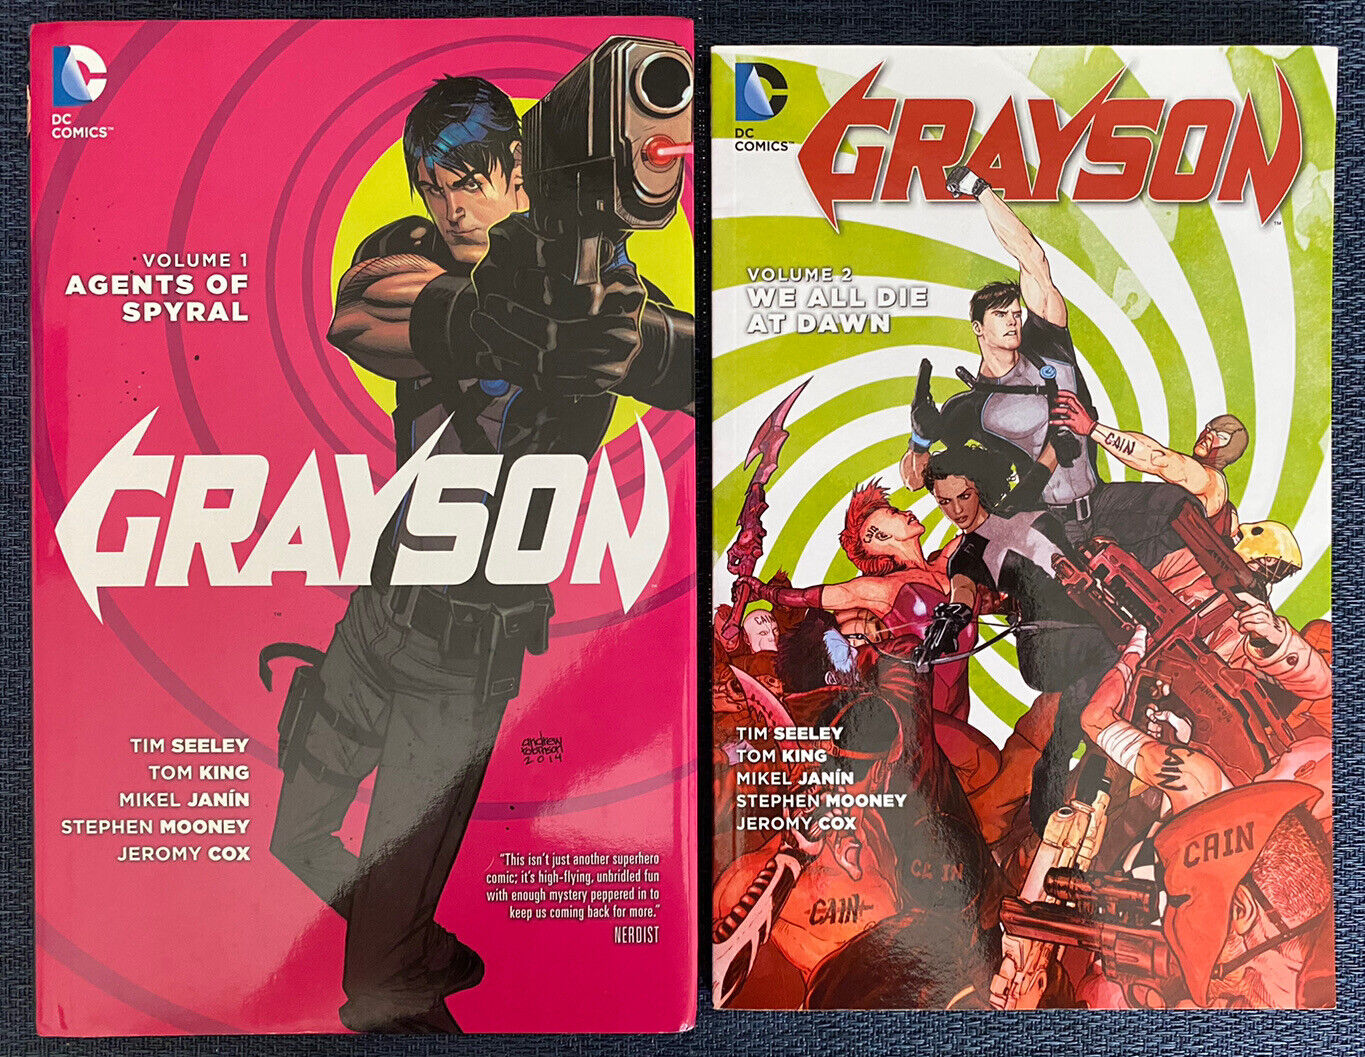 Grayson Vol 1 + 2 (DC Comics) TPB LOT ComicBook Trade Paperback  Hardcover Book